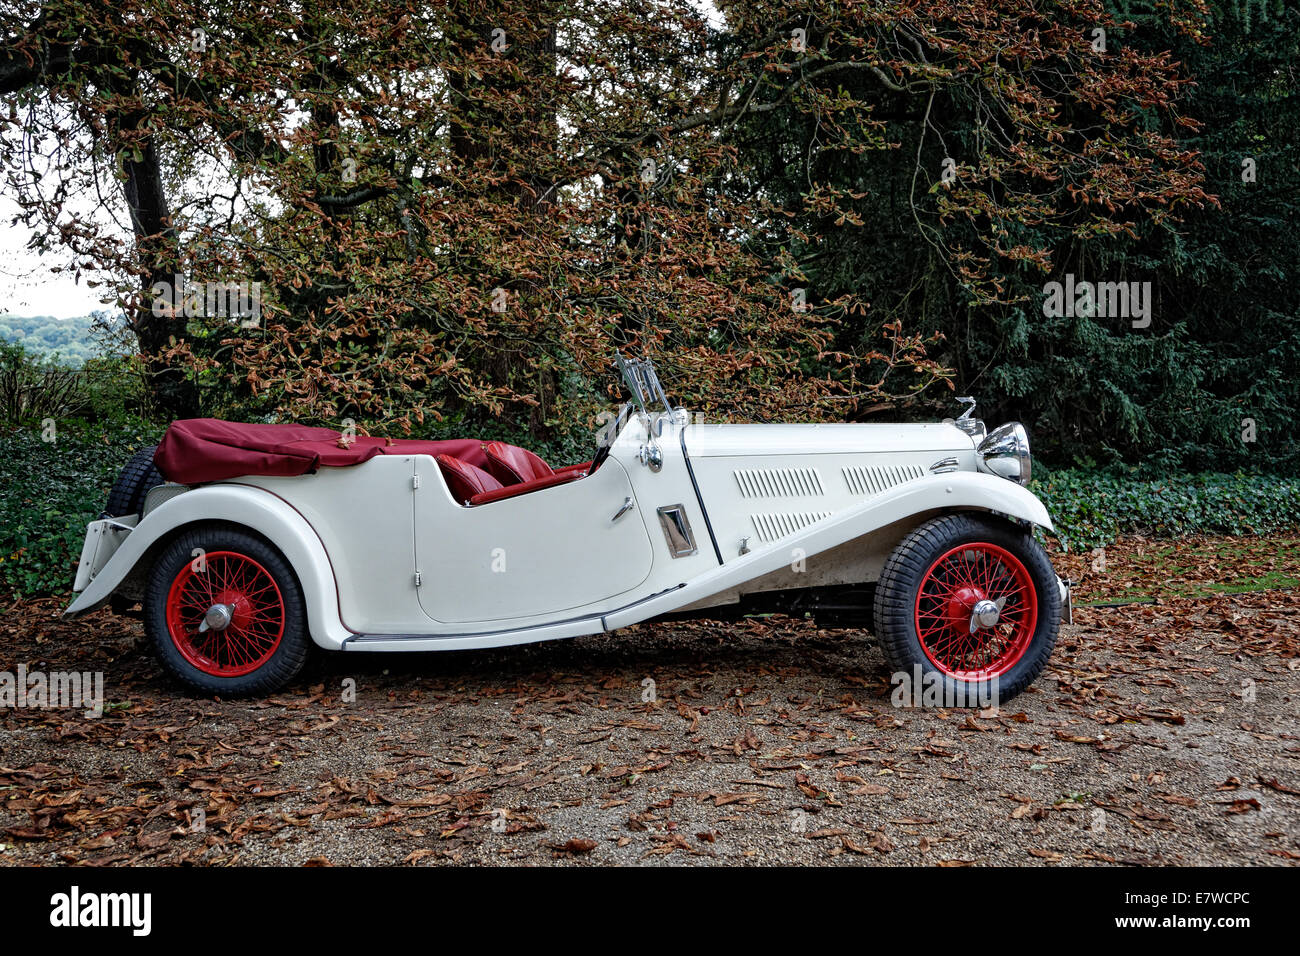 1934 Triumph Motor Company 'Gloria' Monte Carlo Tourer  4 seat motor car Stock Photo